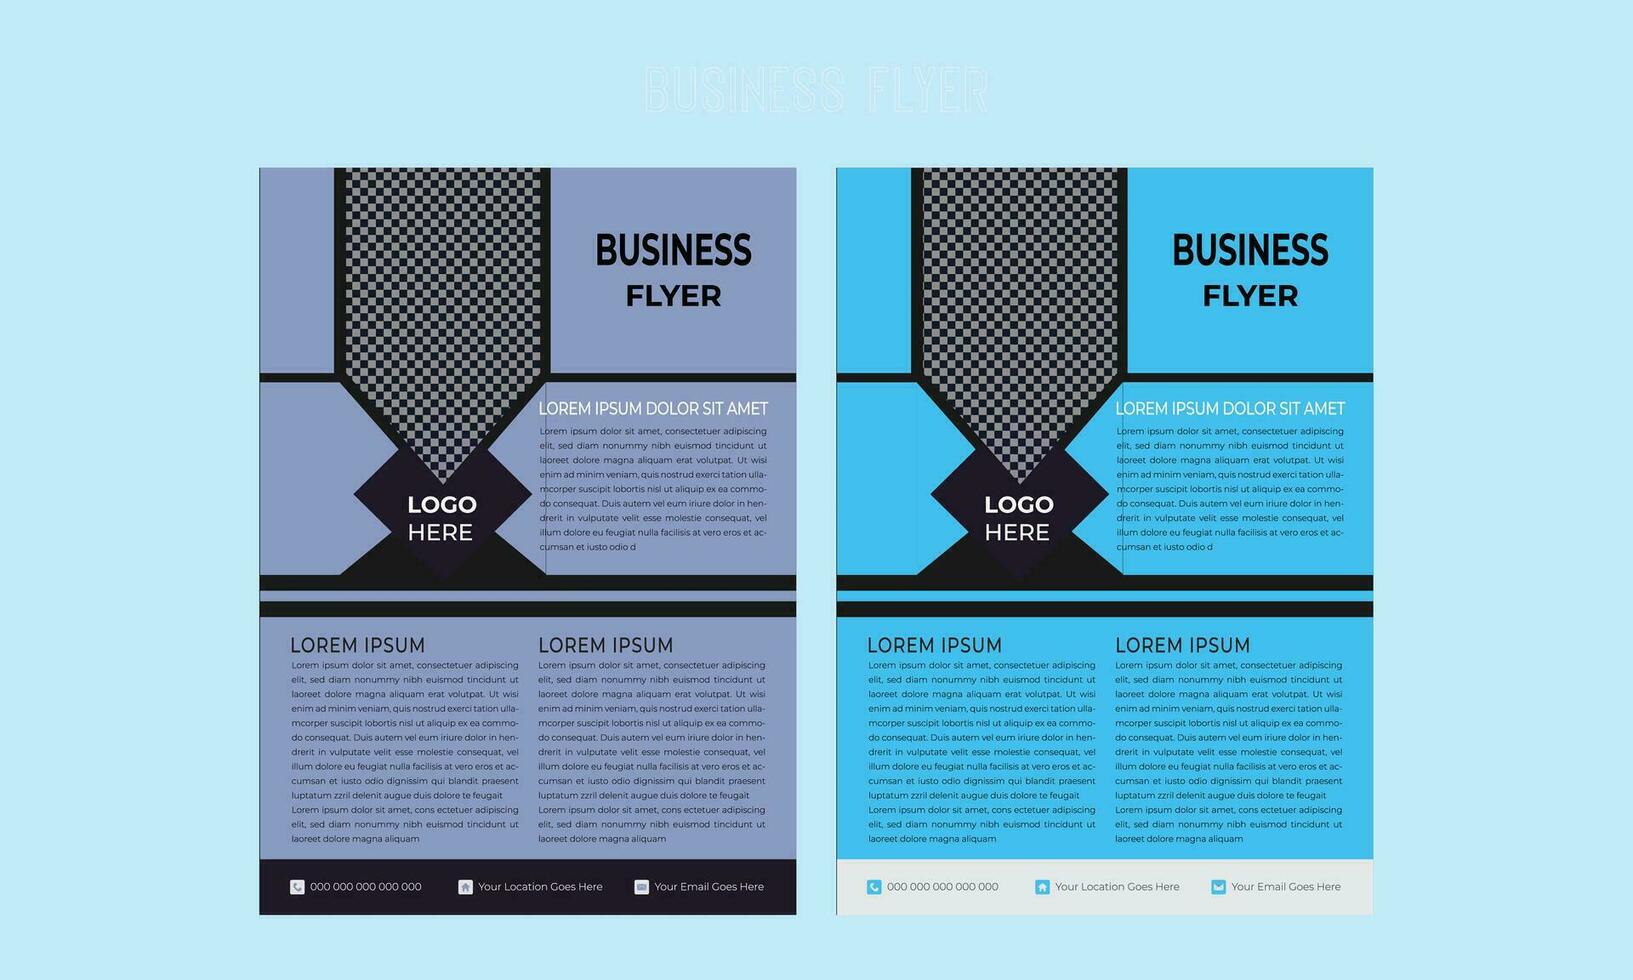 Business flyer corporate design template. vector